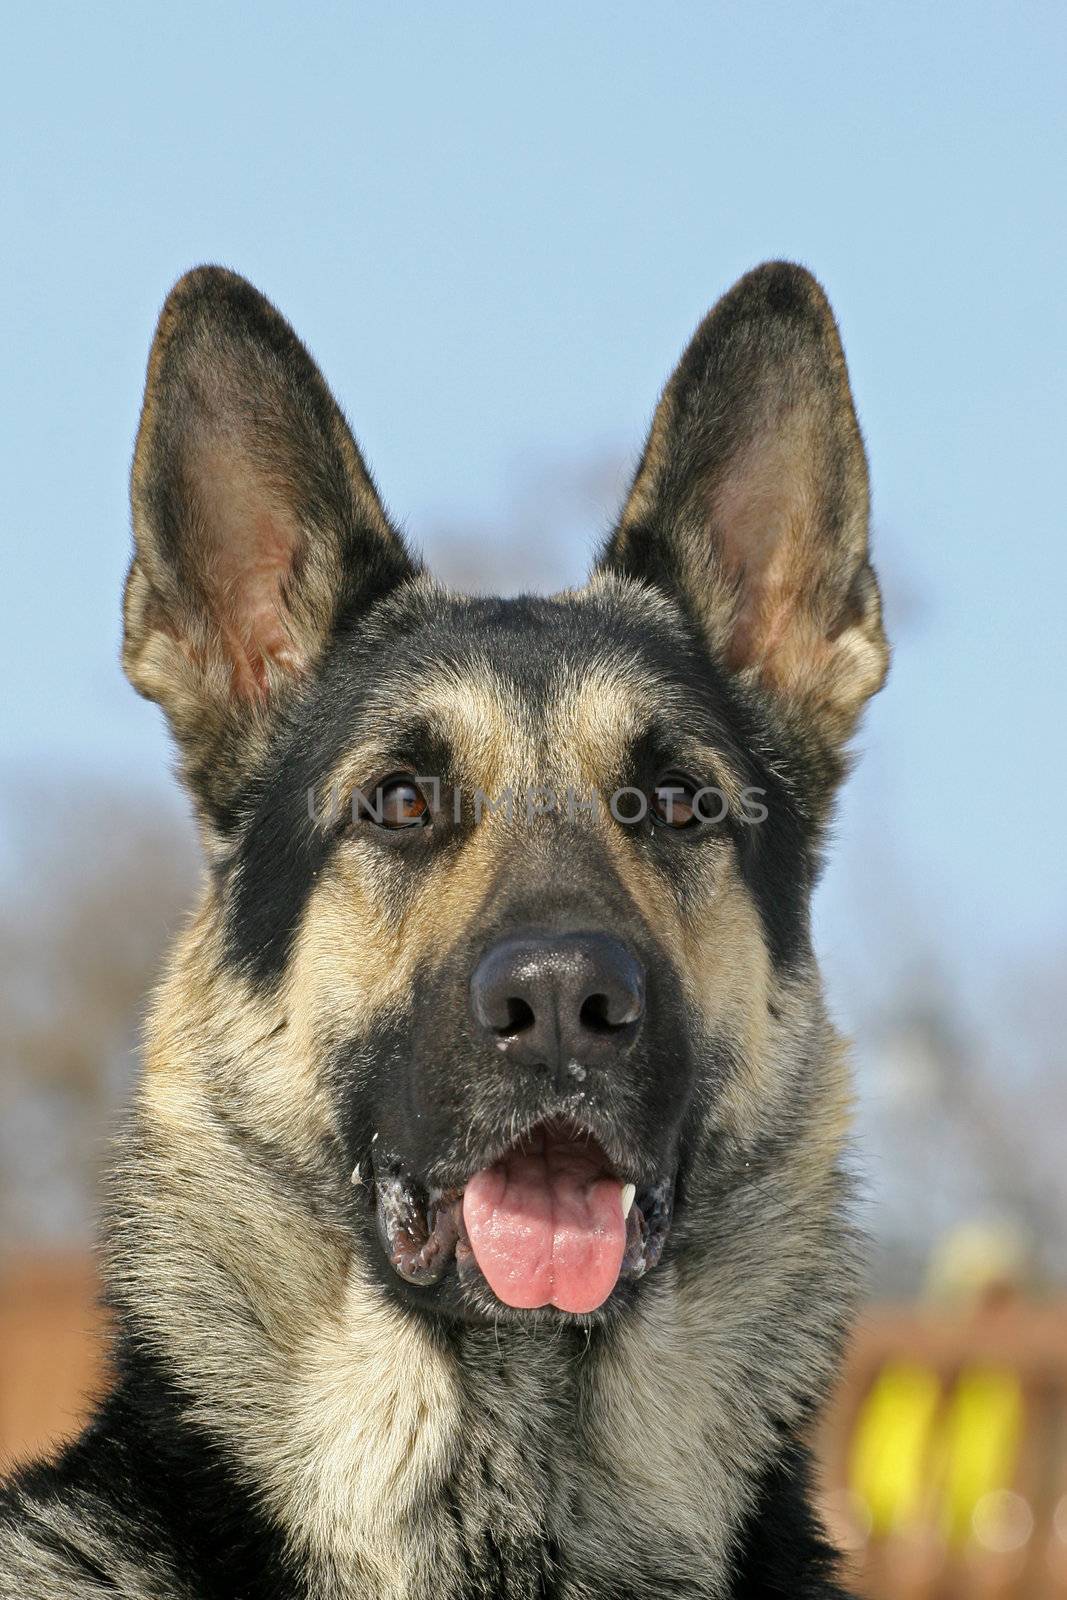 The portrate of east shepherd dog by gsdonlin